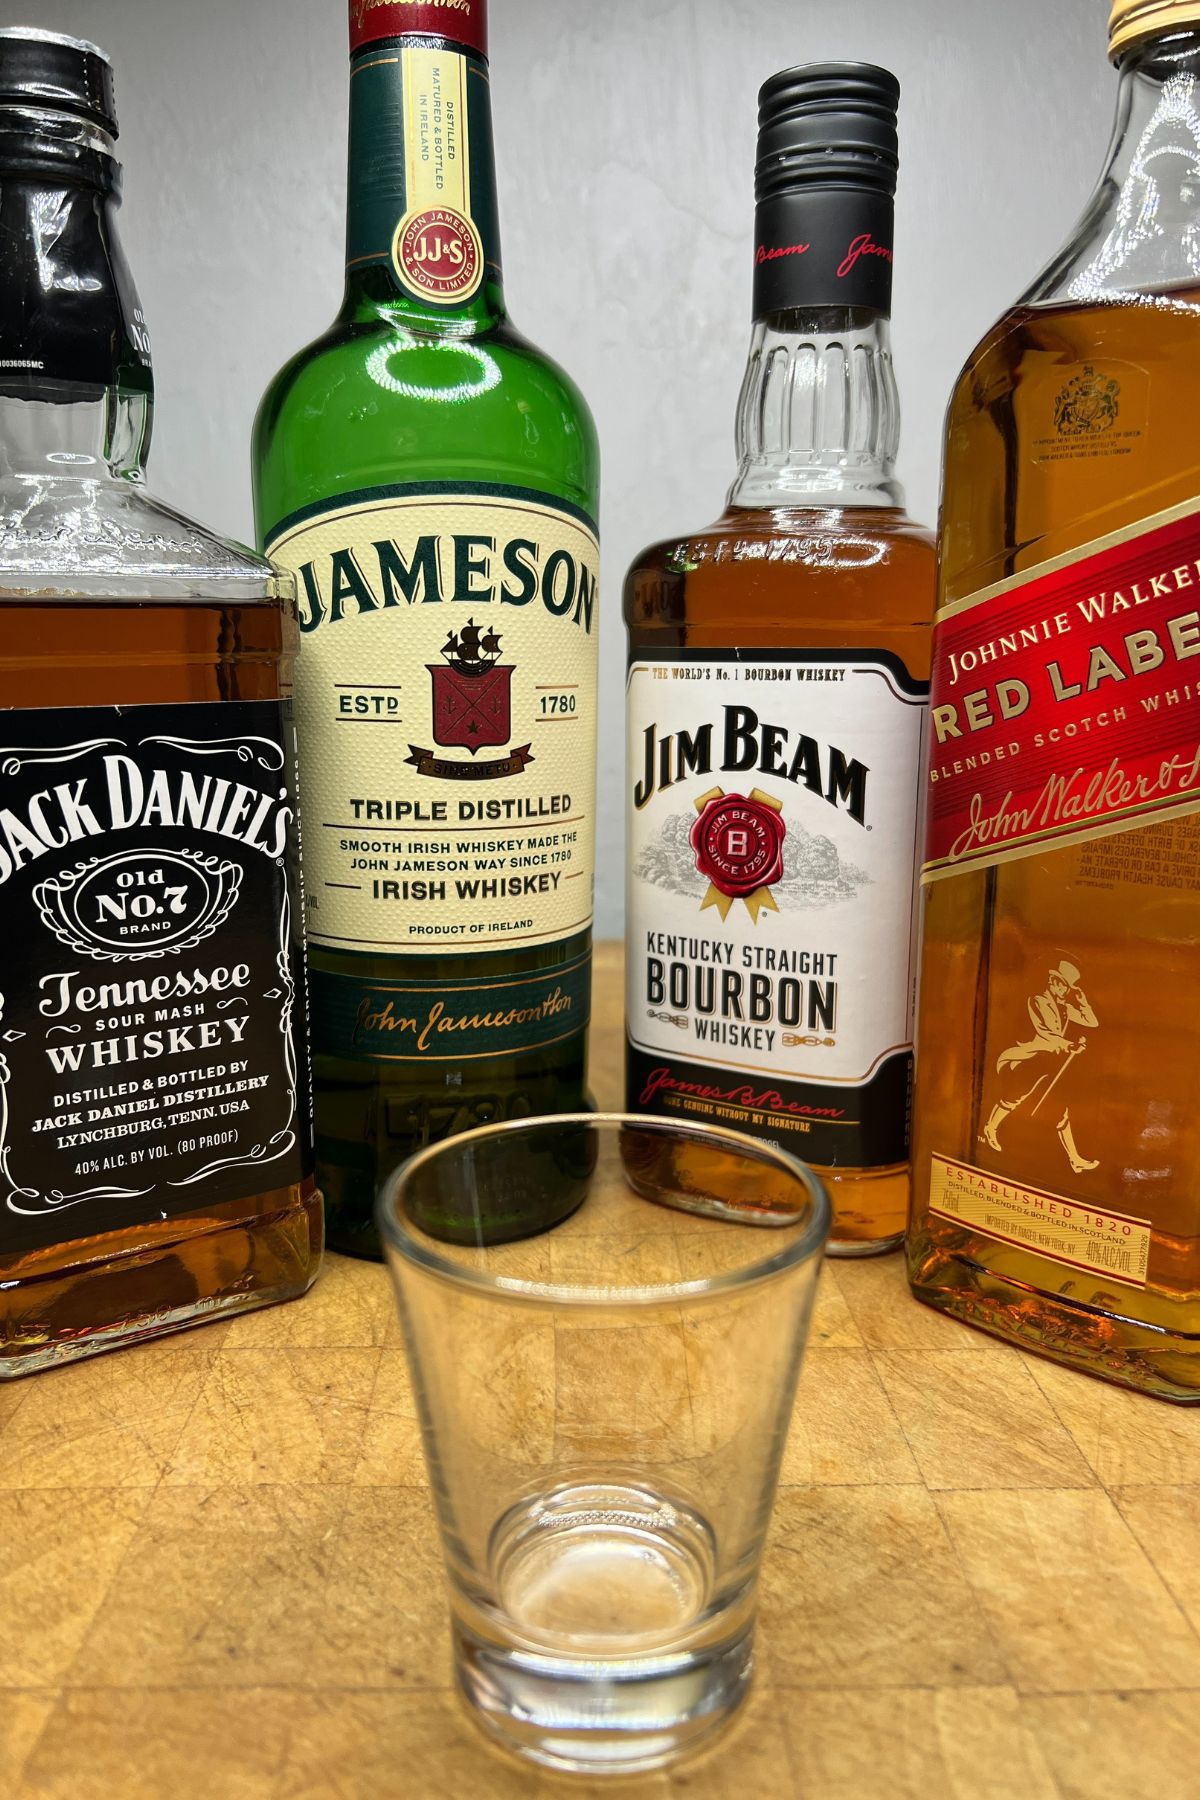 Bottles of Jack Daniels, Jamesons, Jim Beam and Johnnie Walker behind a shot glass.